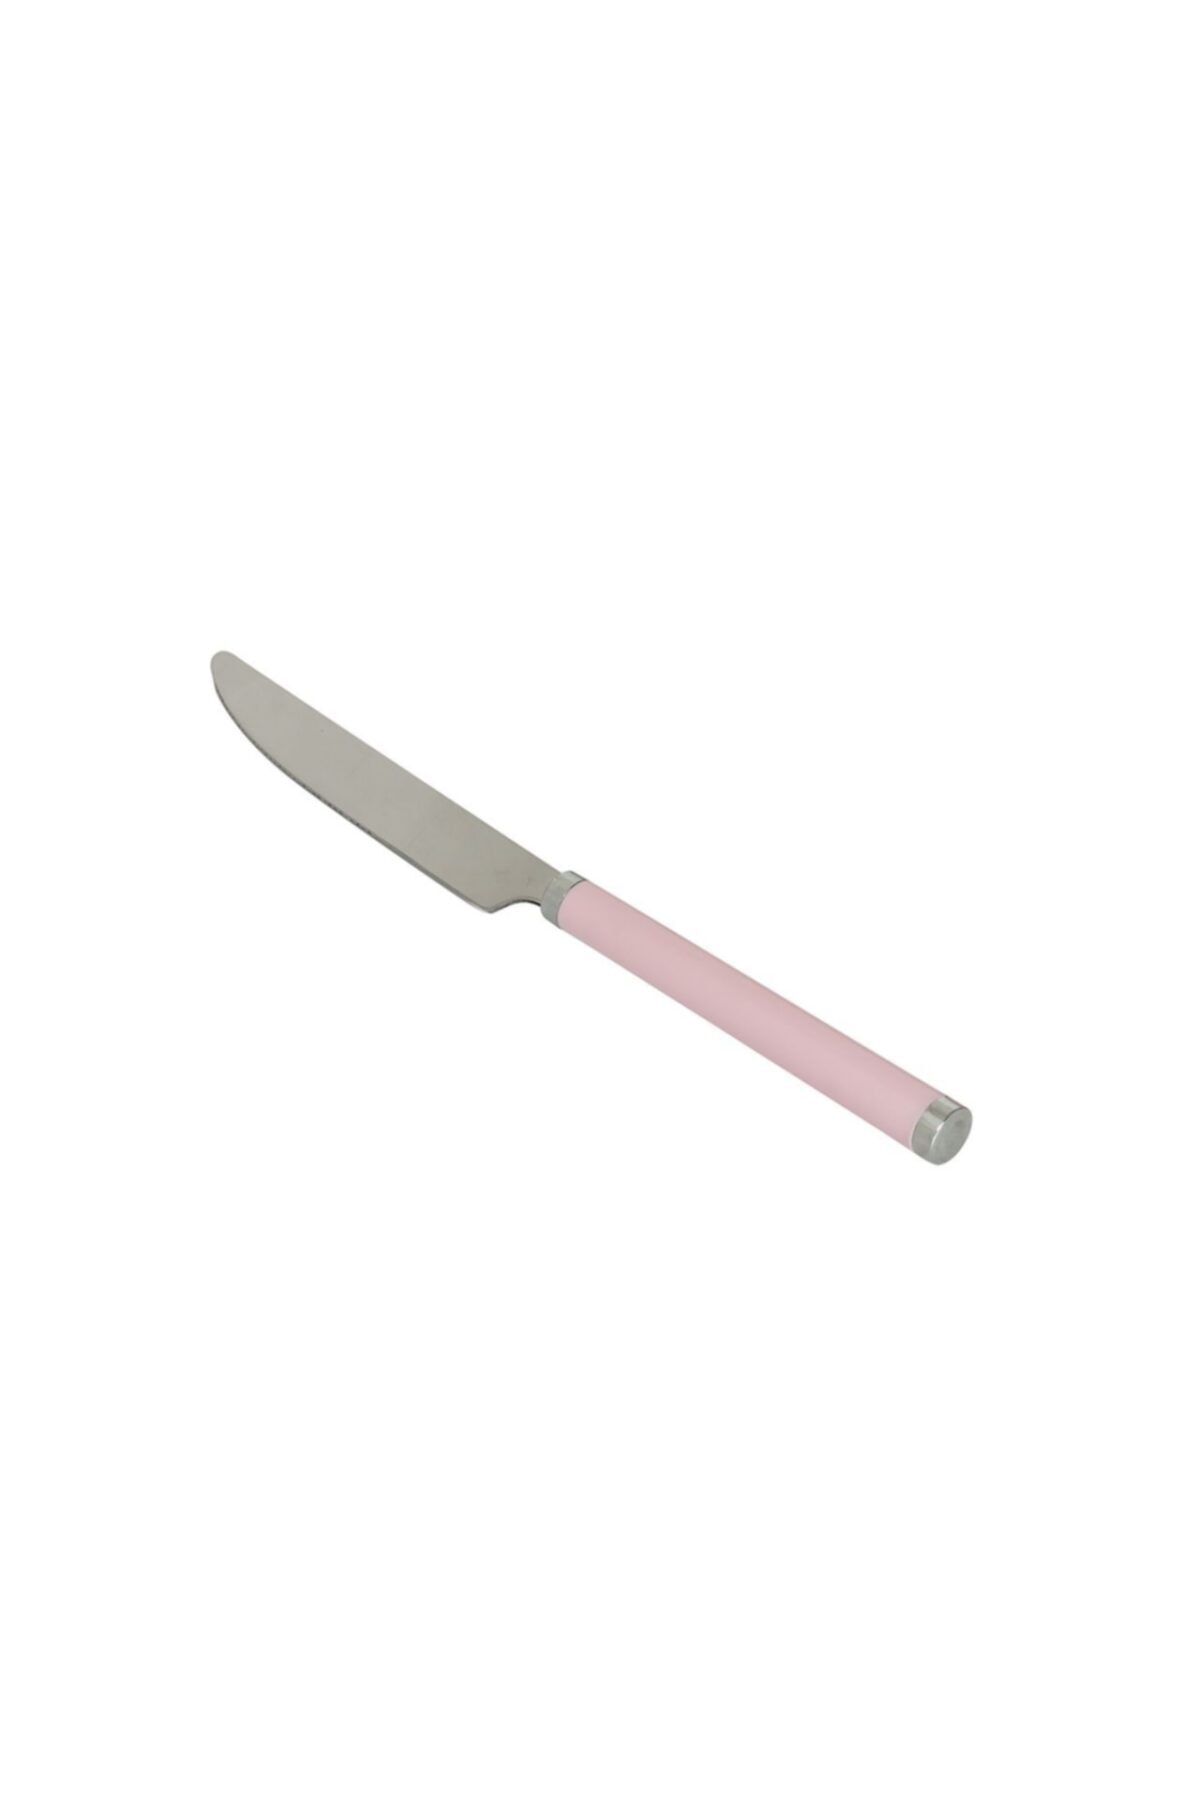 EWs Soft Pembe Düz Saplı Tatlı Bıçağı